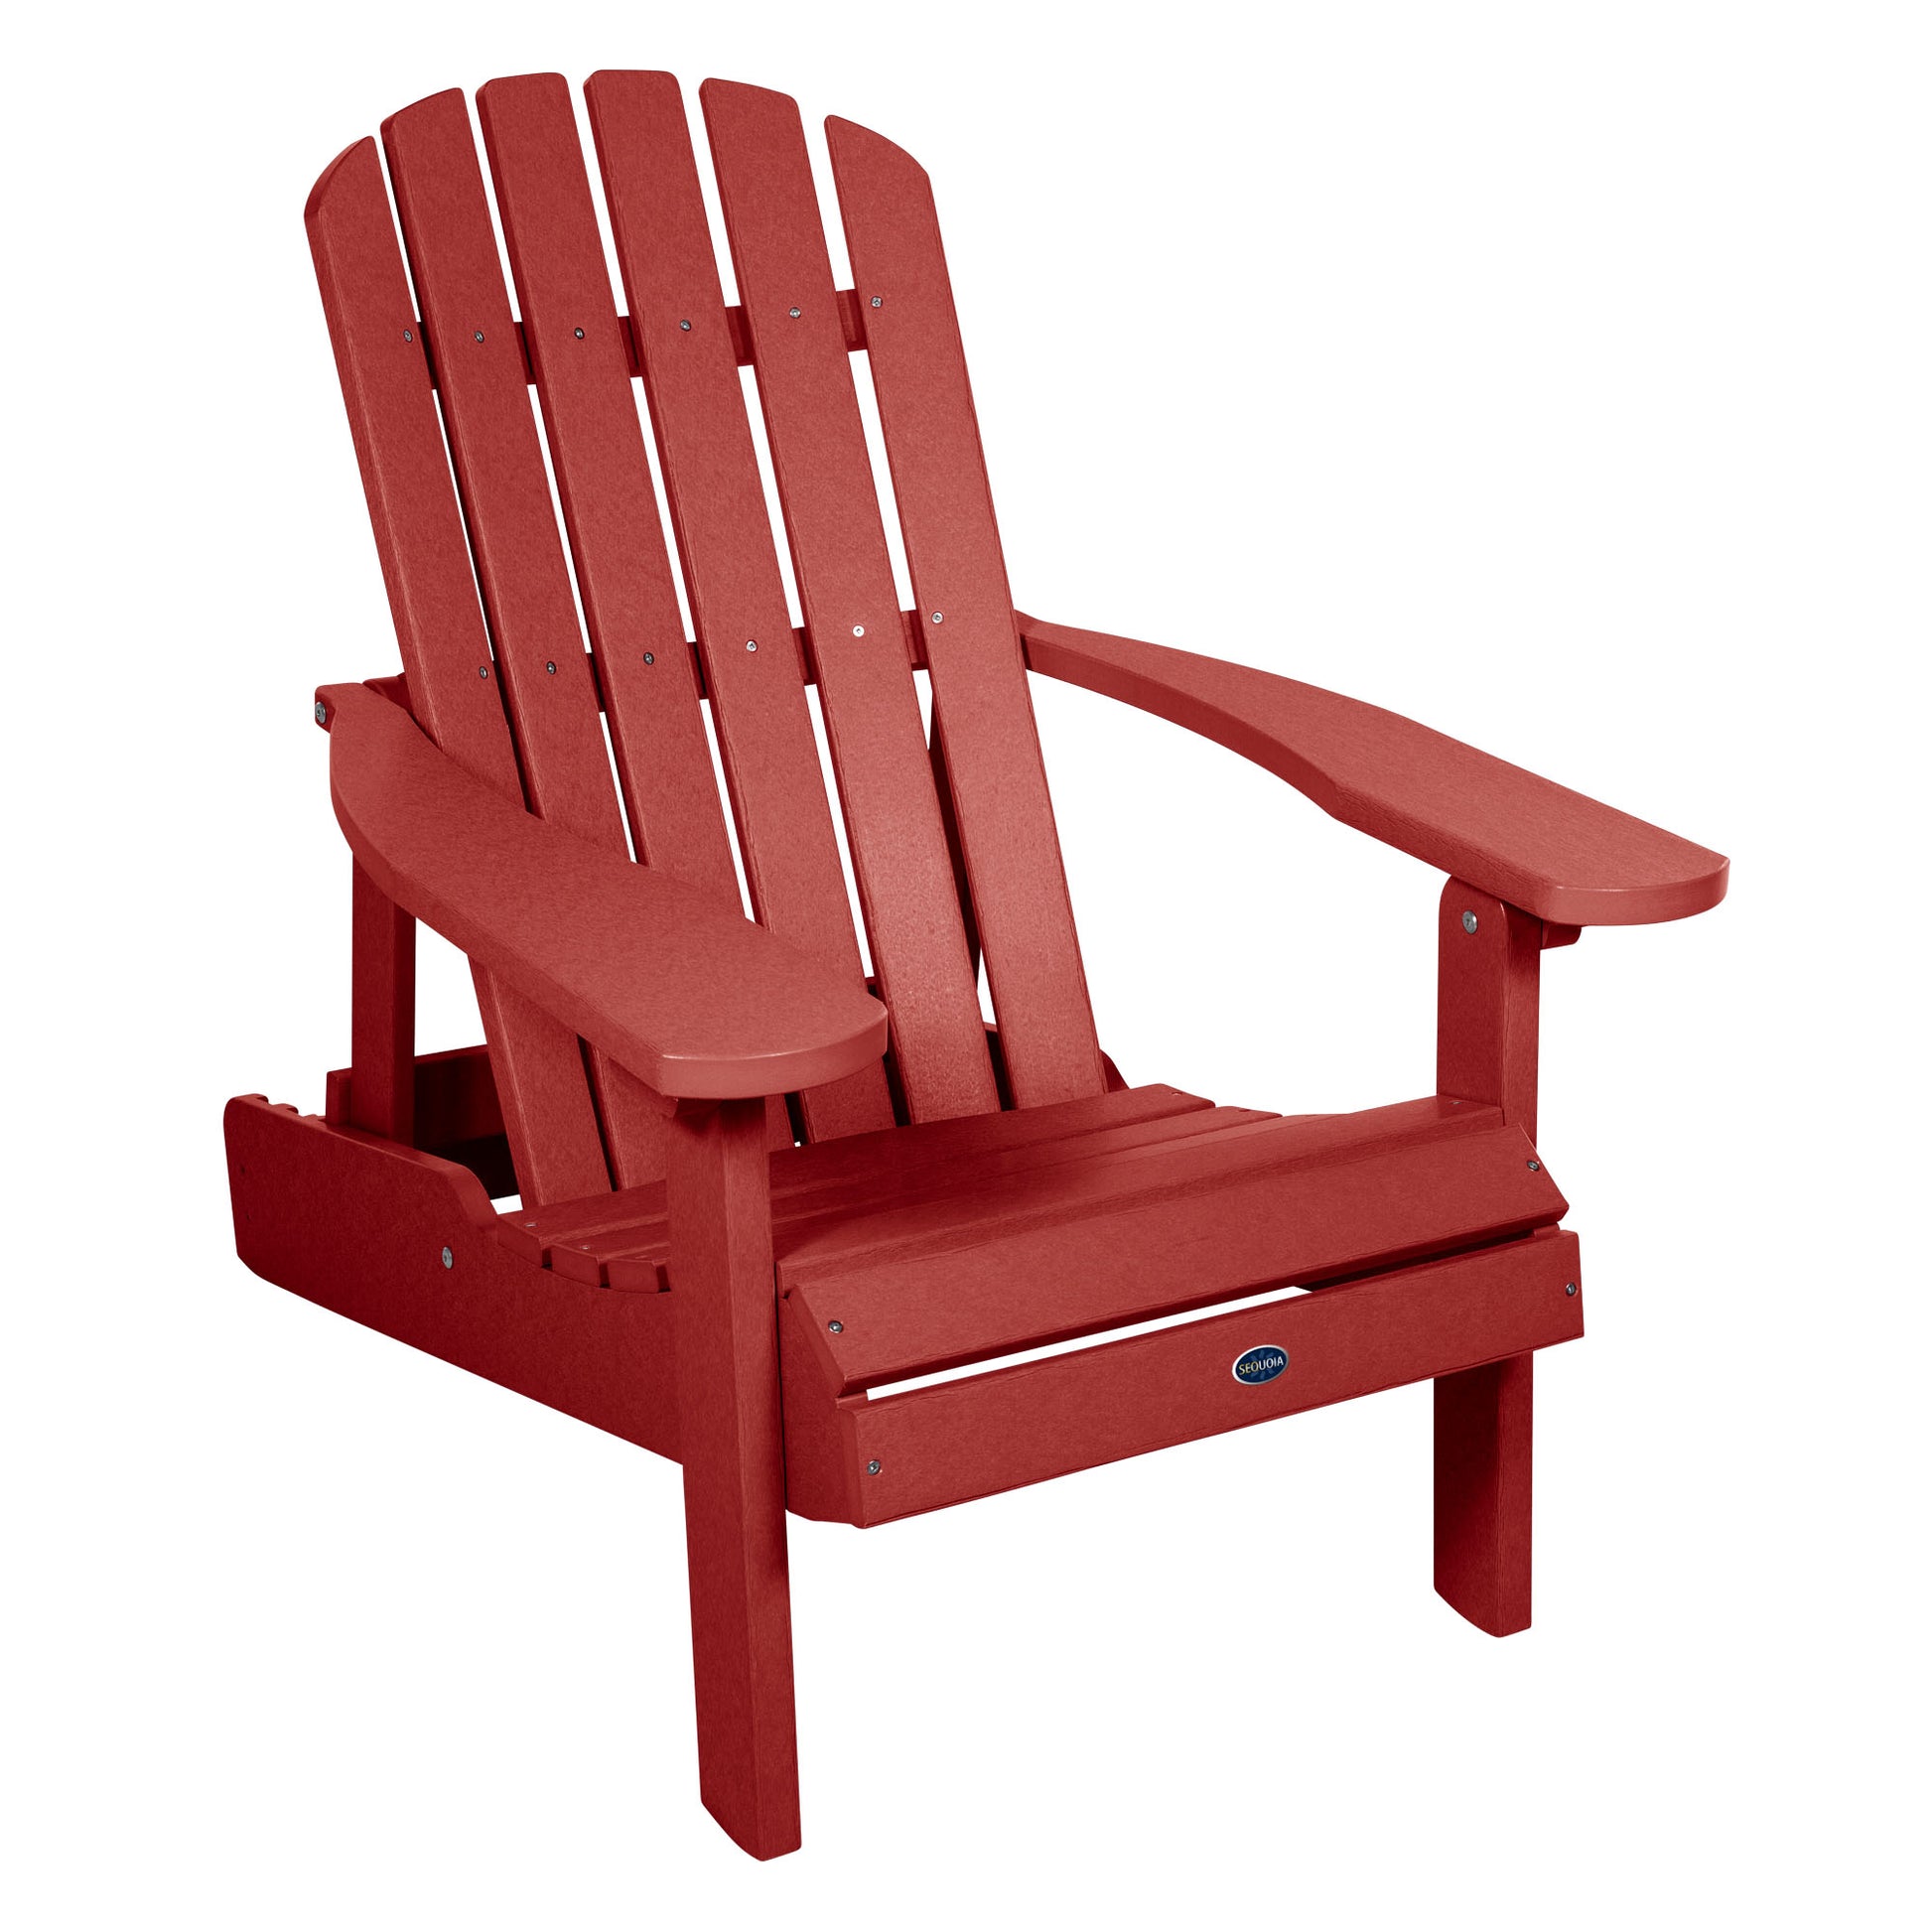 Sunrise Coast reclining Adirondack chair in Boathouse Red